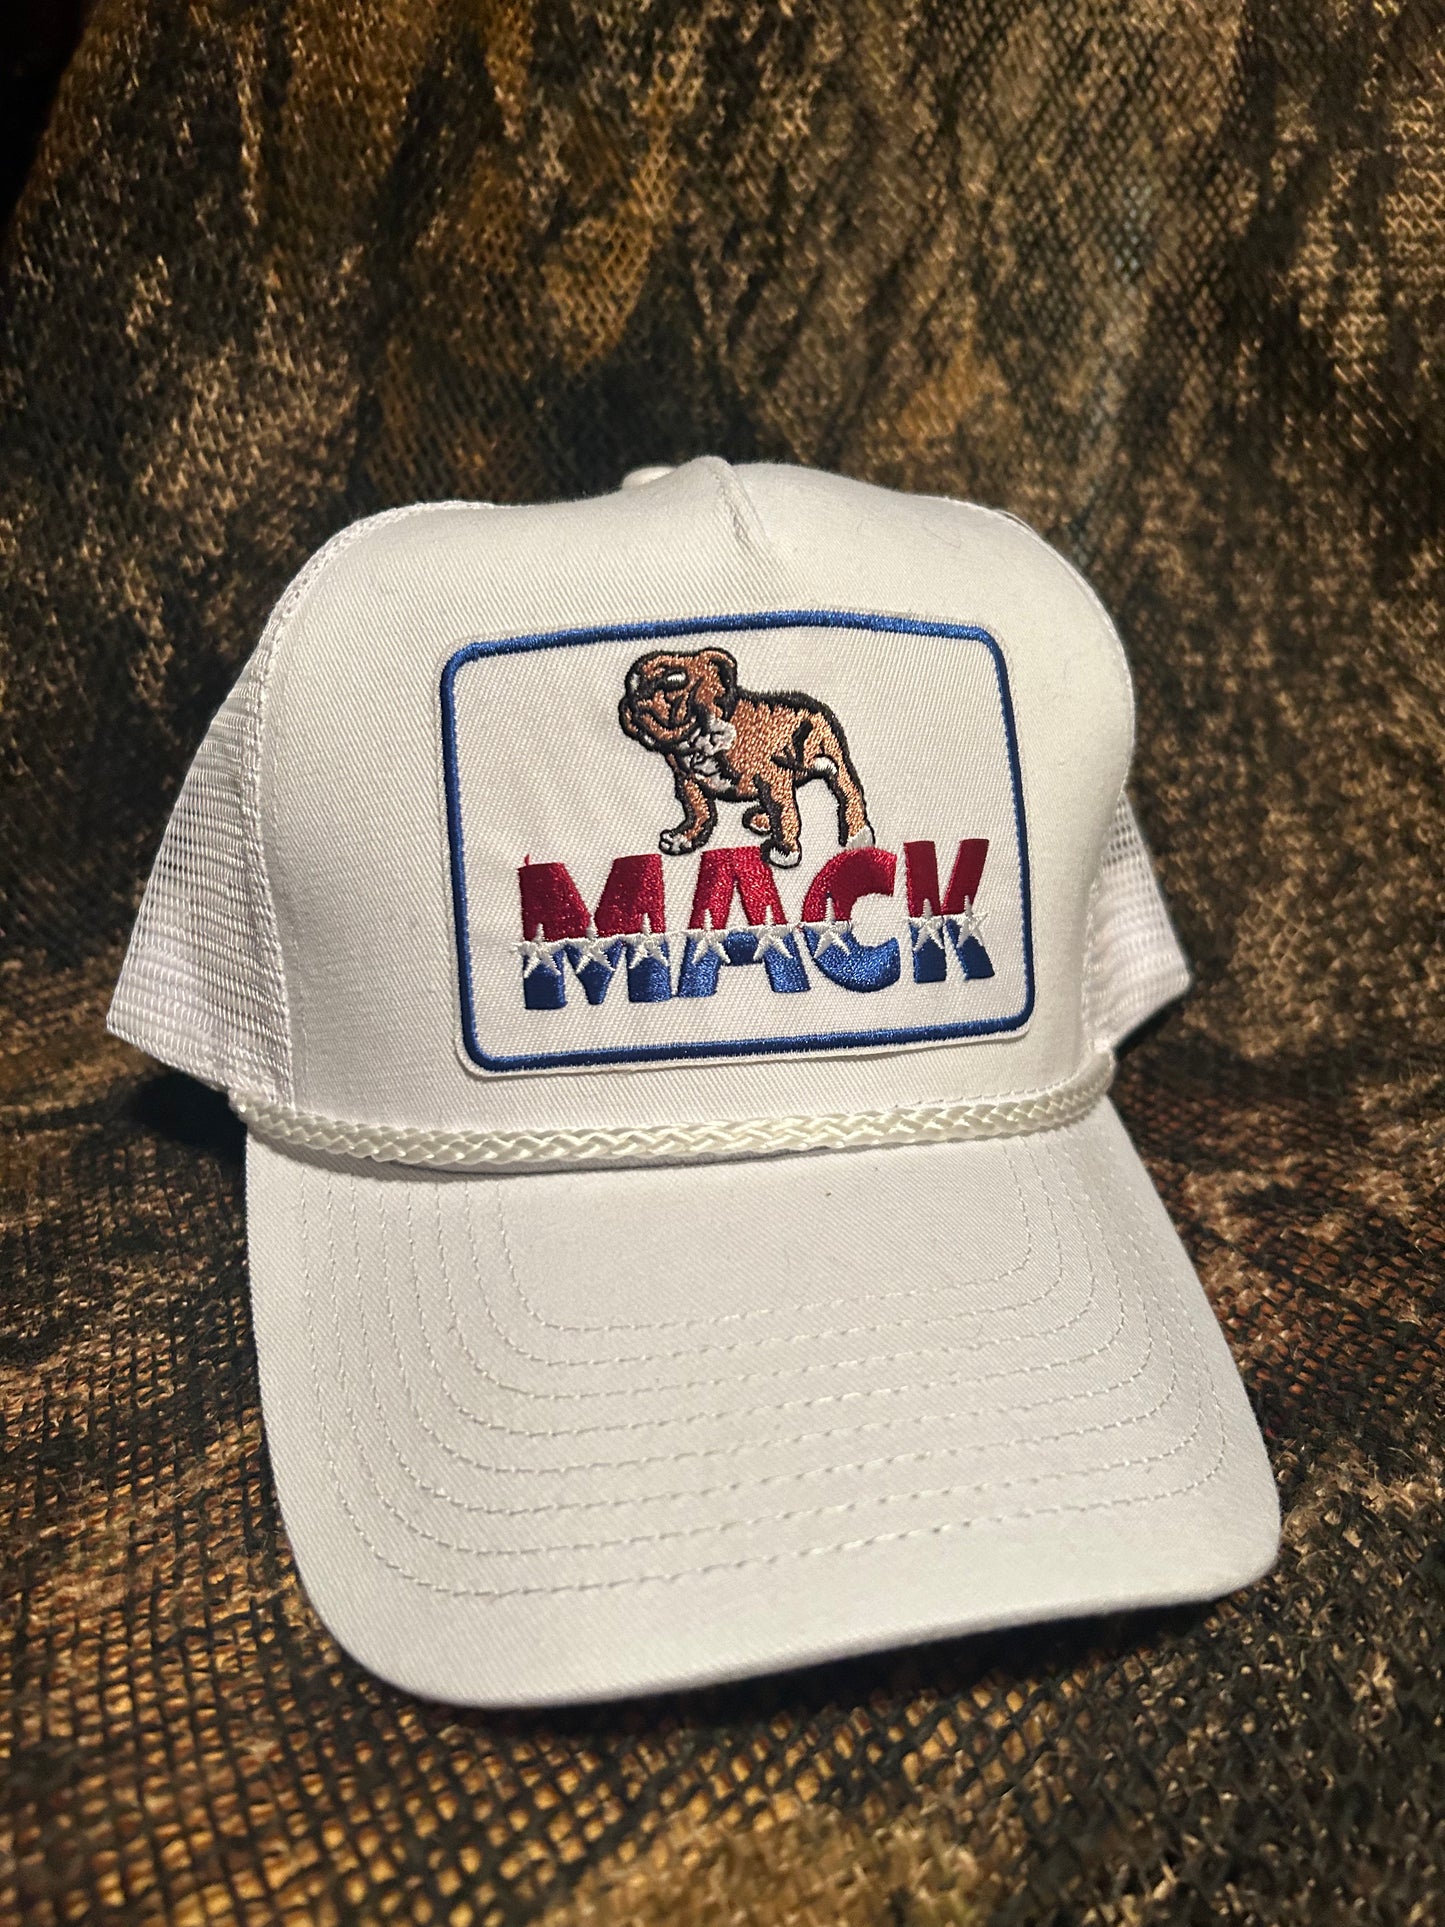 Mack Truck white SnapBack trucker hat